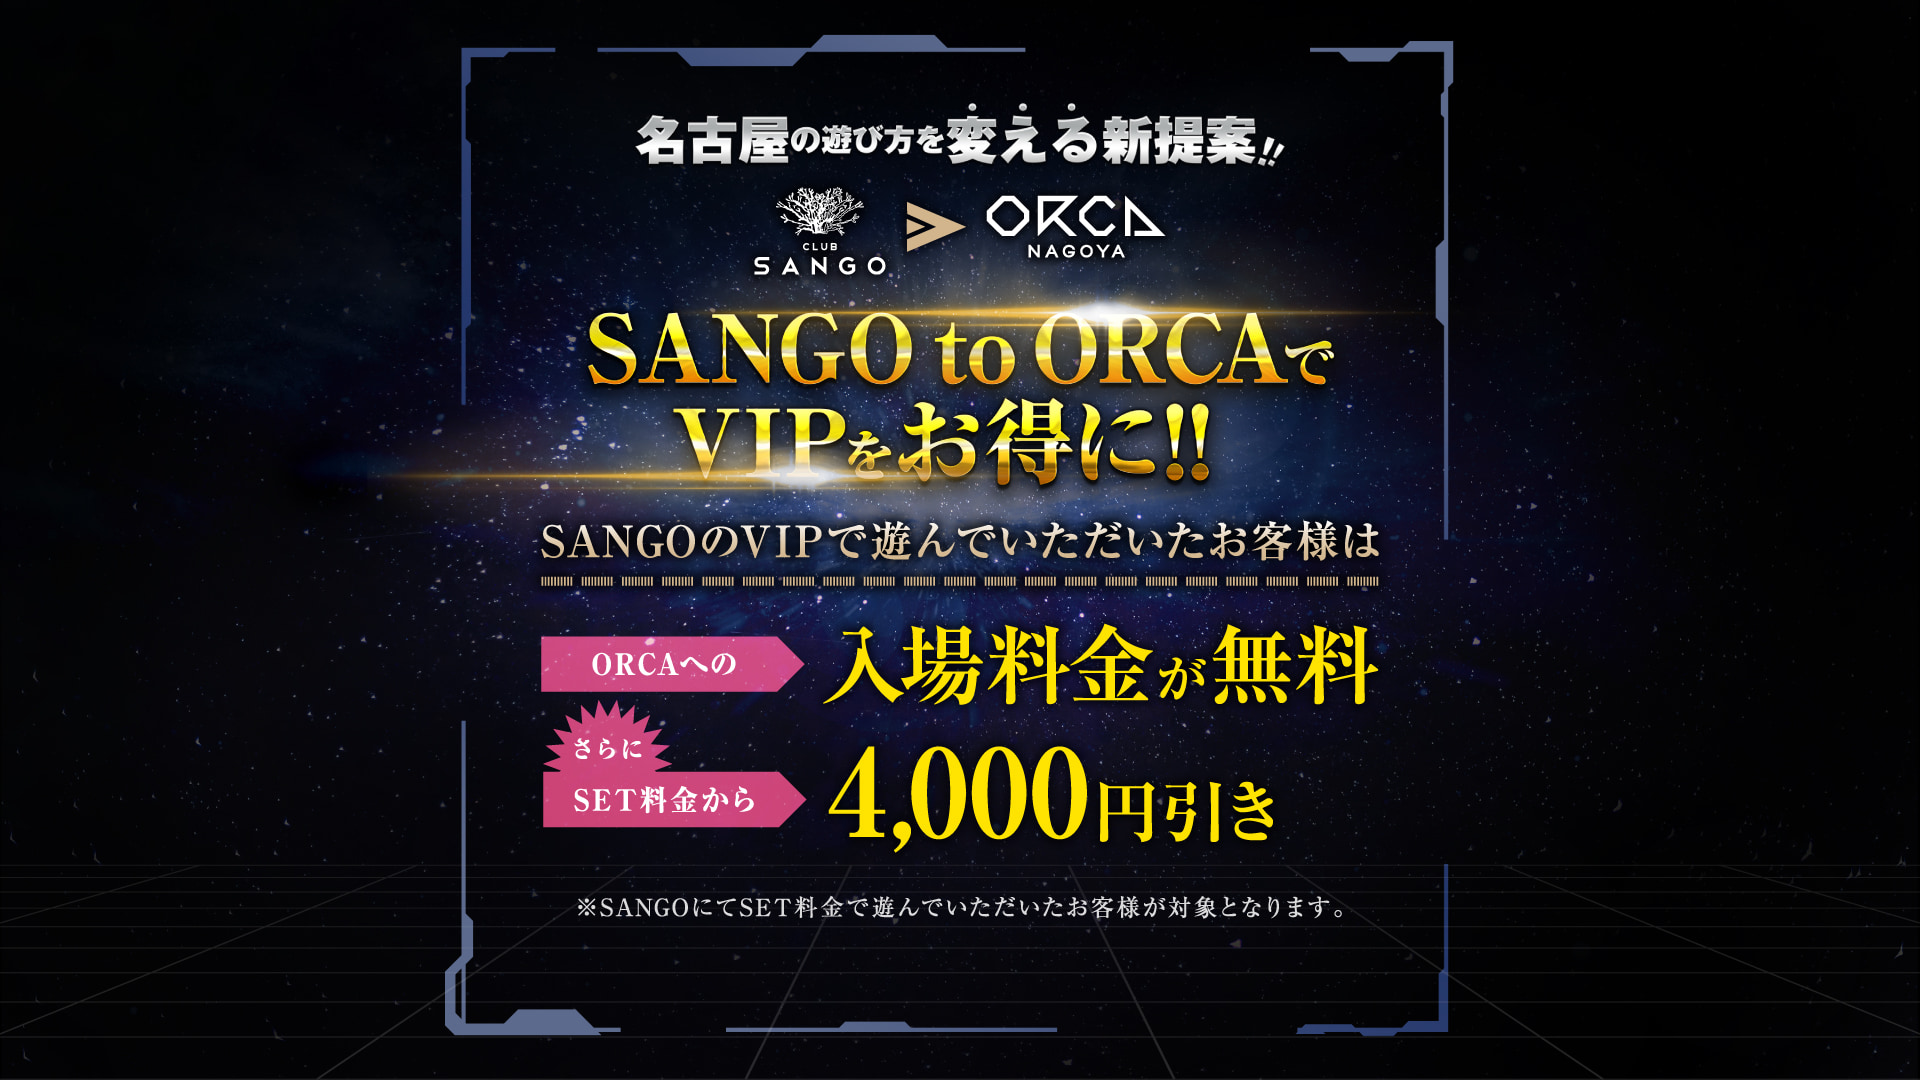 SANGO to ORCA でVIPをお得に!!